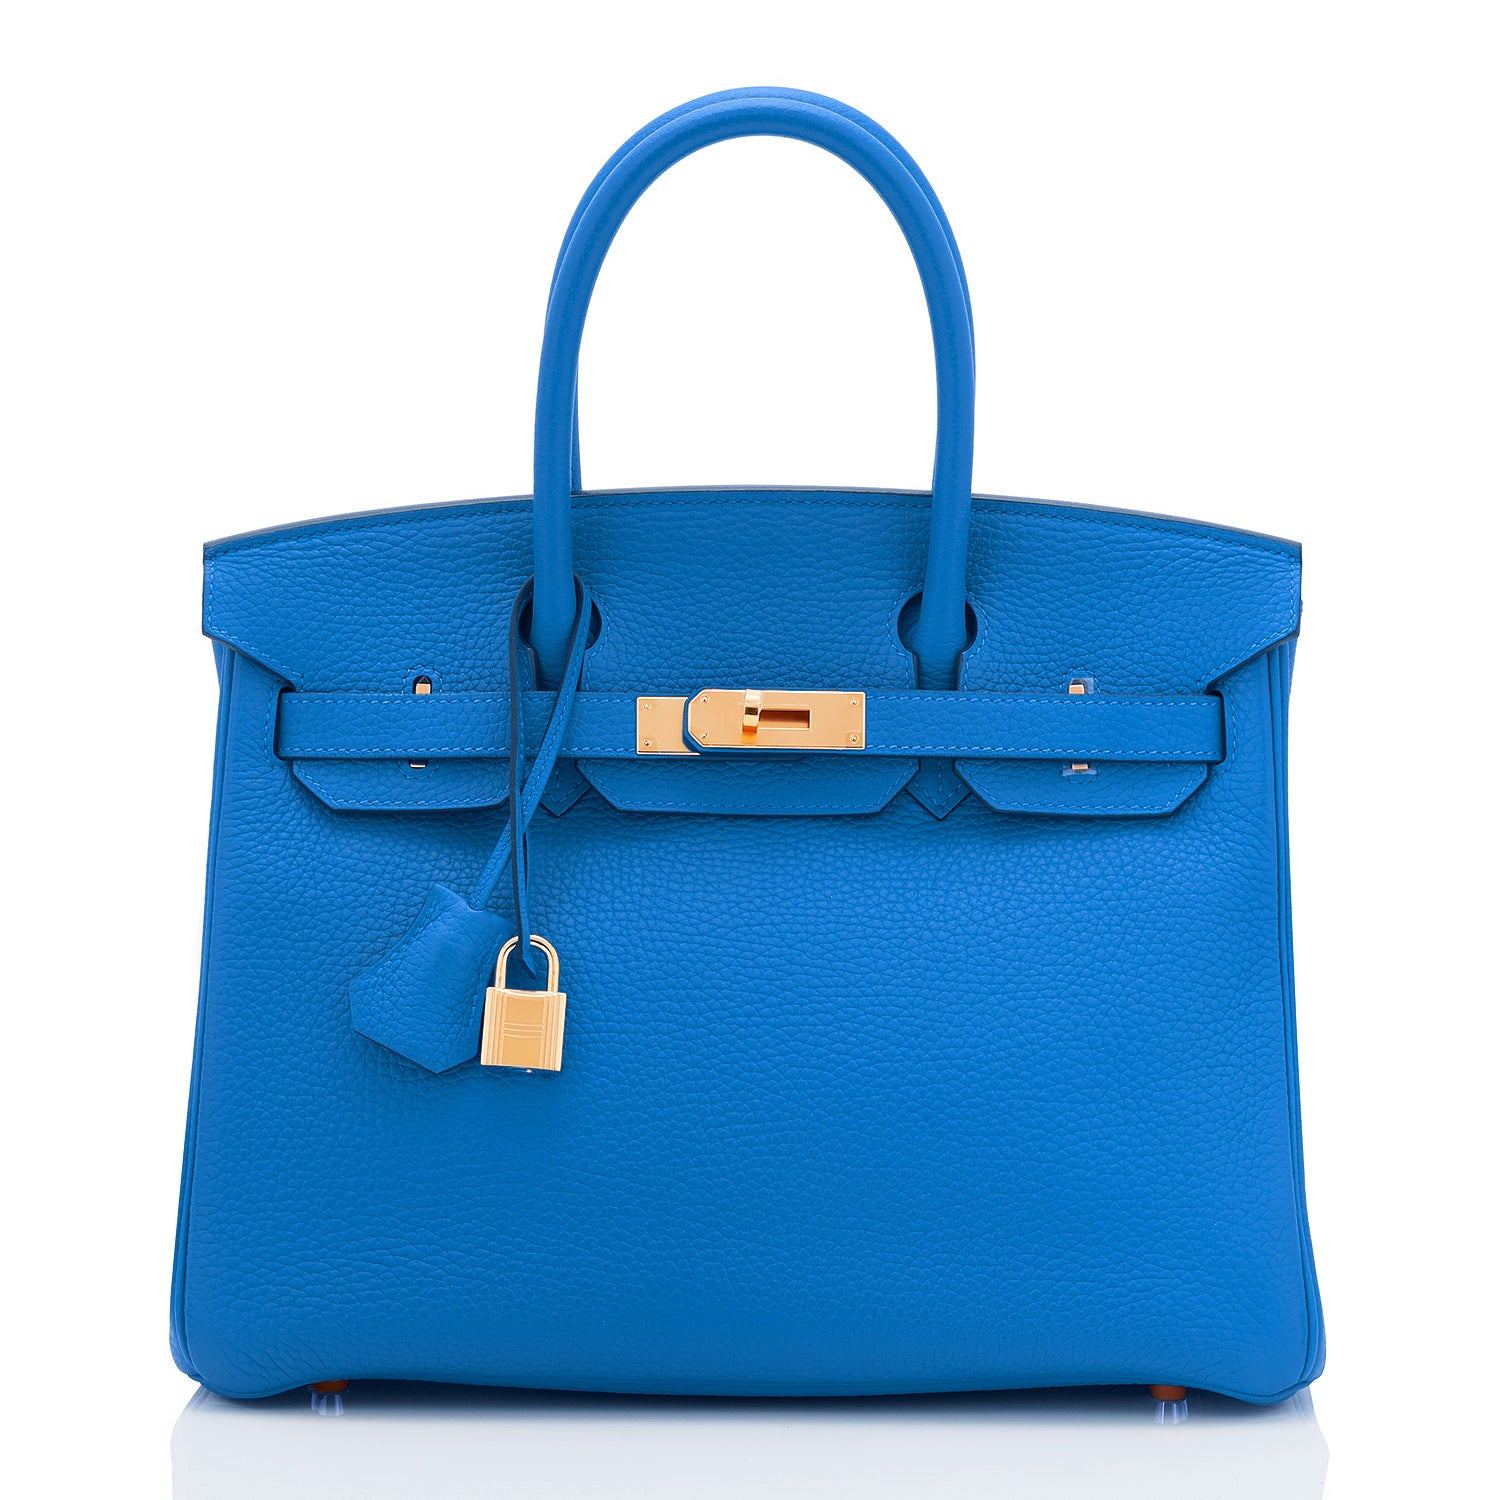 HERMES BIRKIN 30 Togo with gold fittings ETOUPE Blue bag ORIGINAL